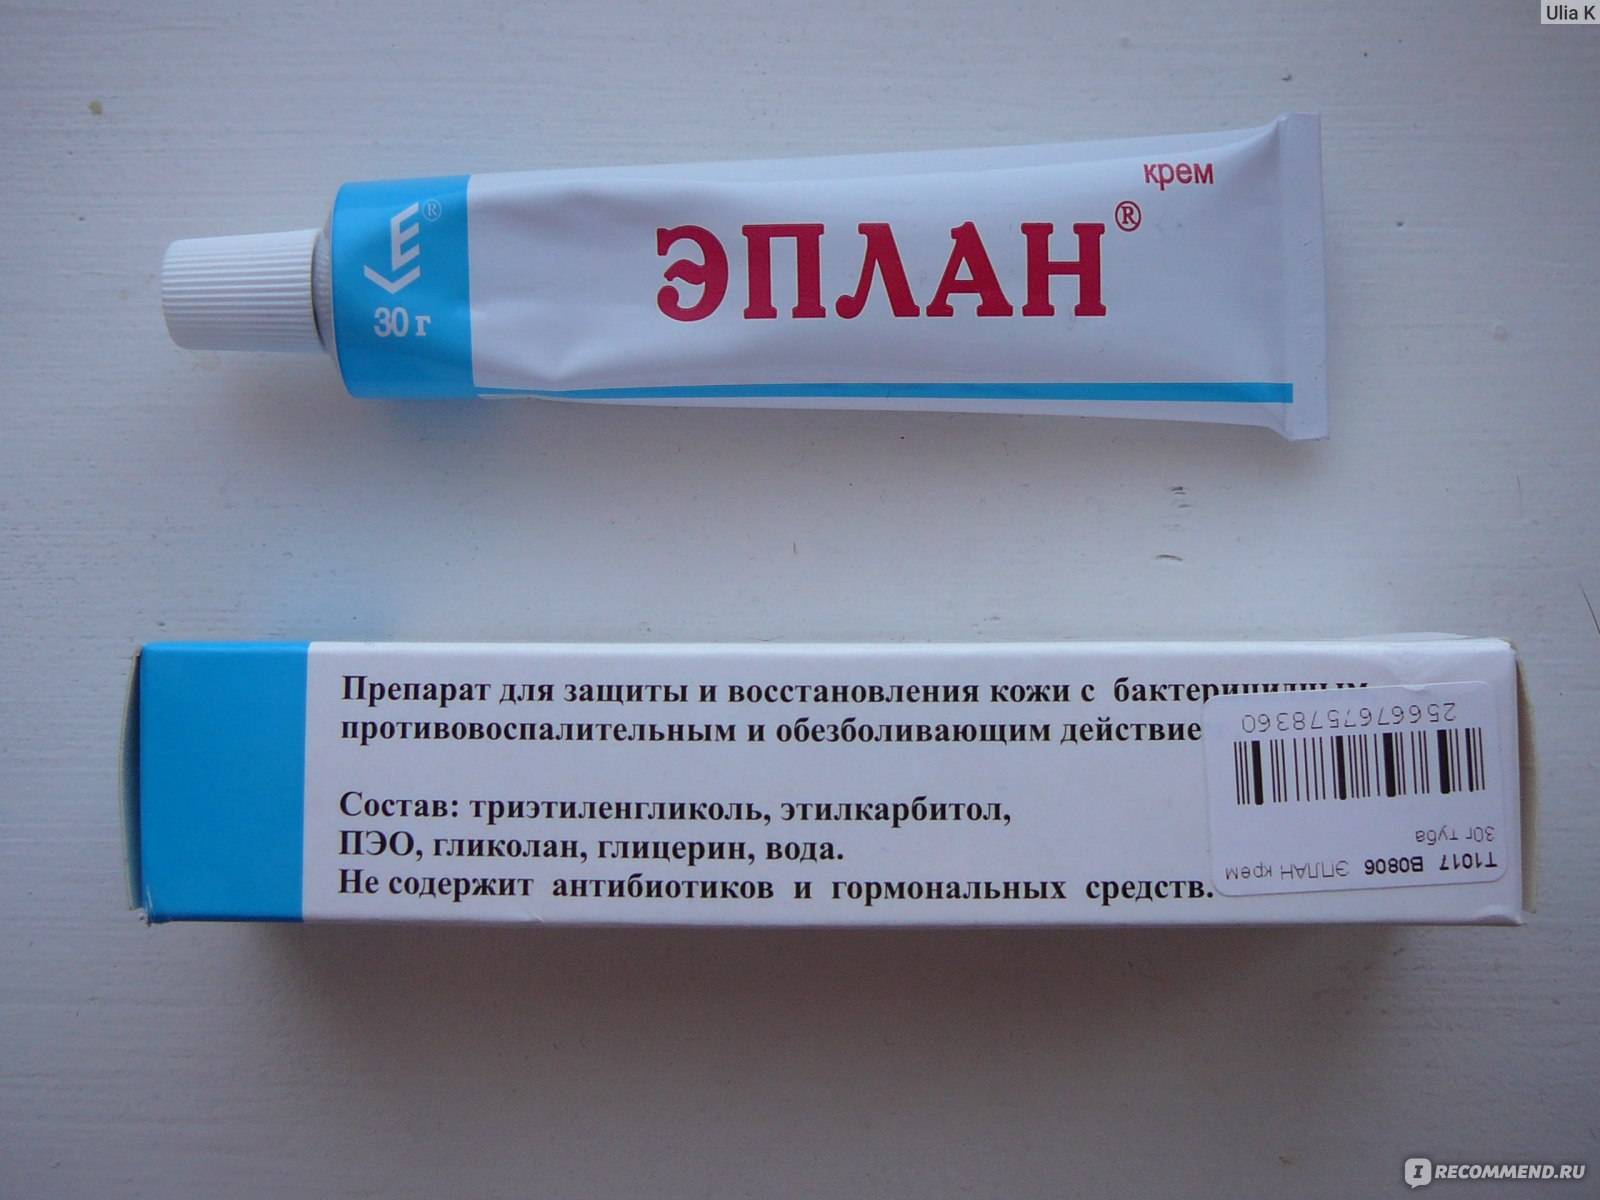 Препарат: тимоген в аптеках москвы